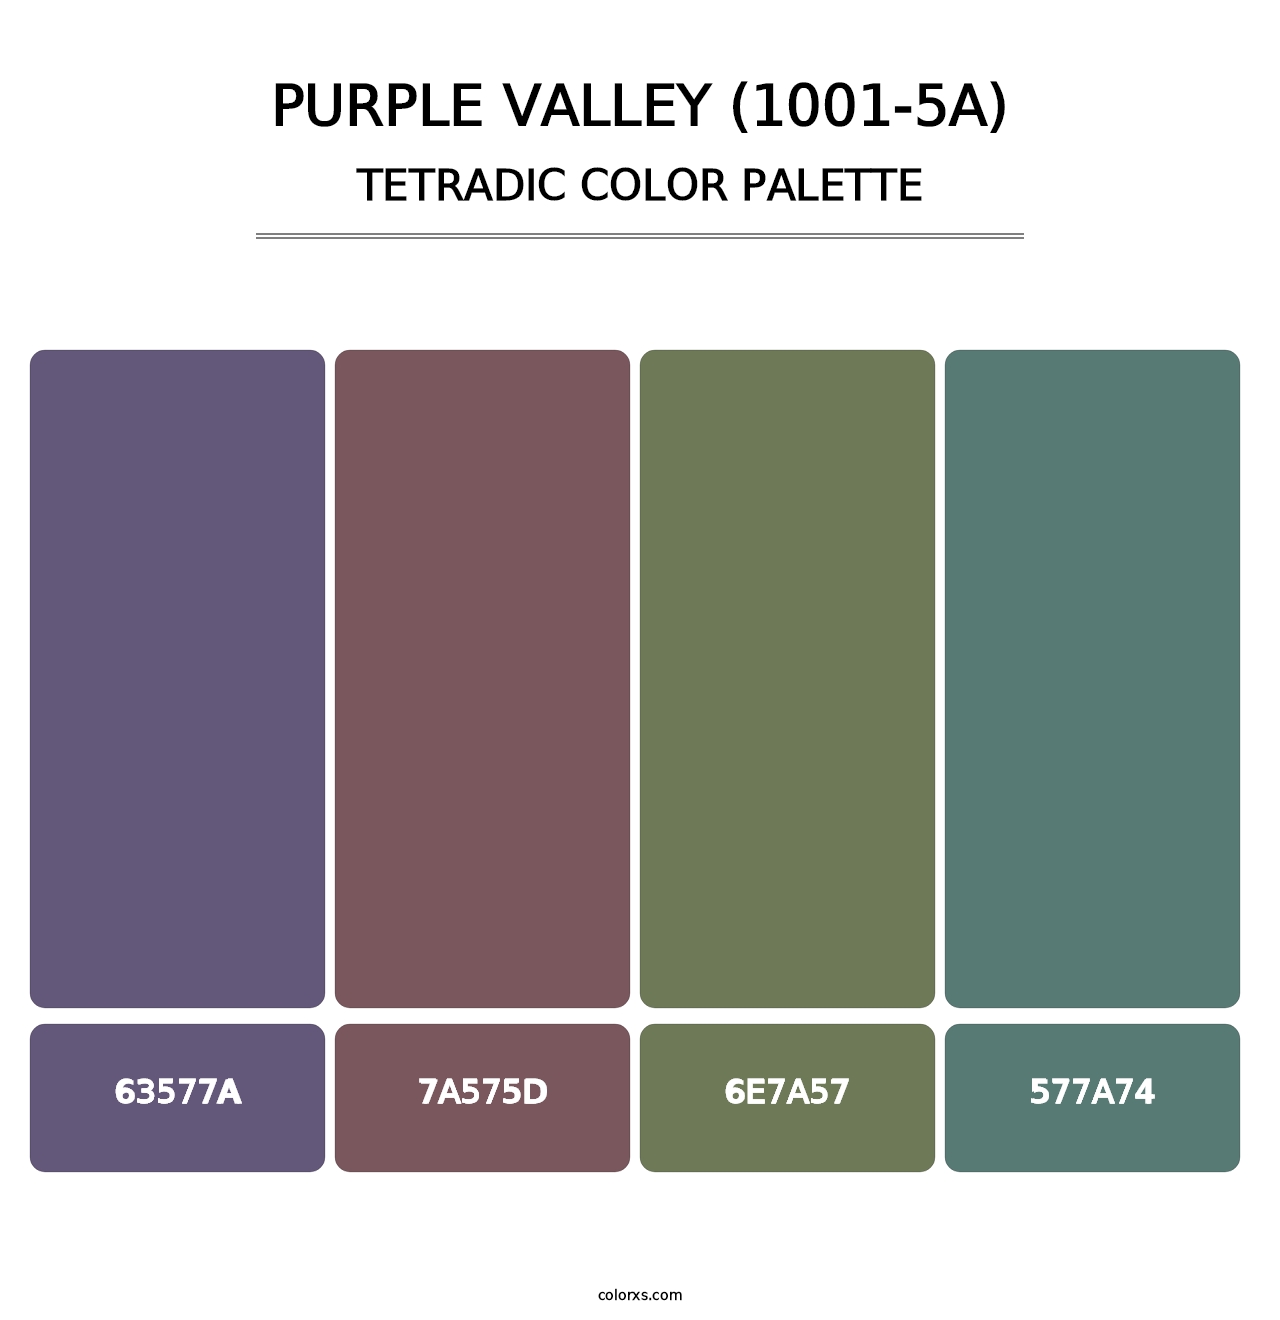 Purple Valley (1001-5A) - Tetradic Color Palette